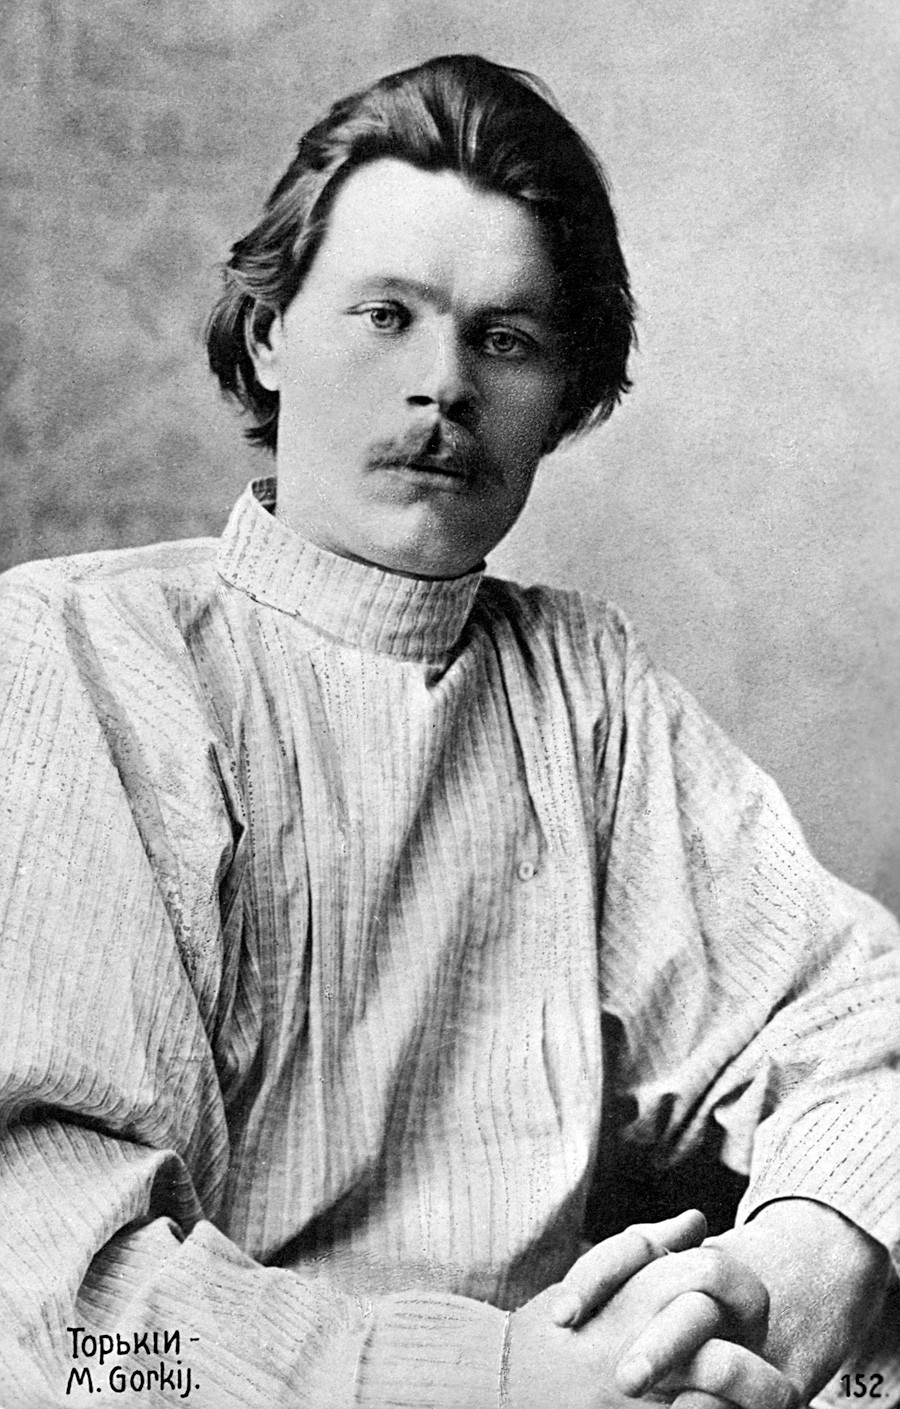 Maxim Gorky in 1907